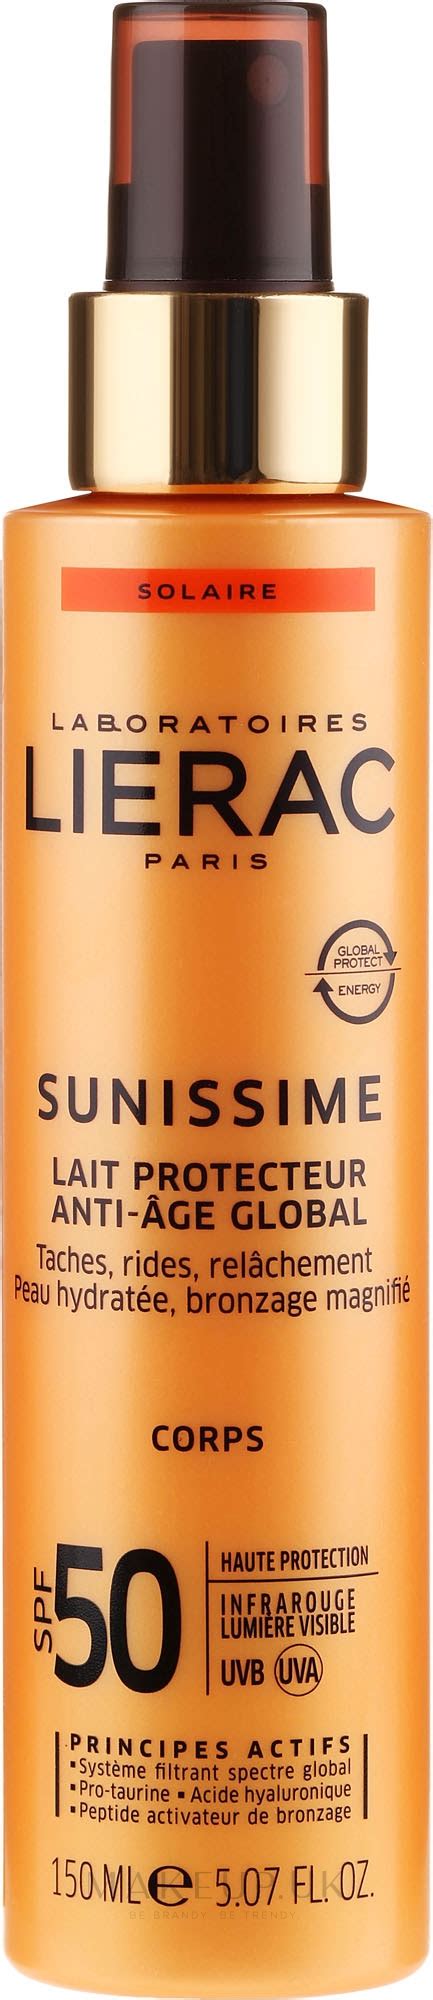 Lierac Sunissime Sun Protection Body Milk Spf50 Makeupuk